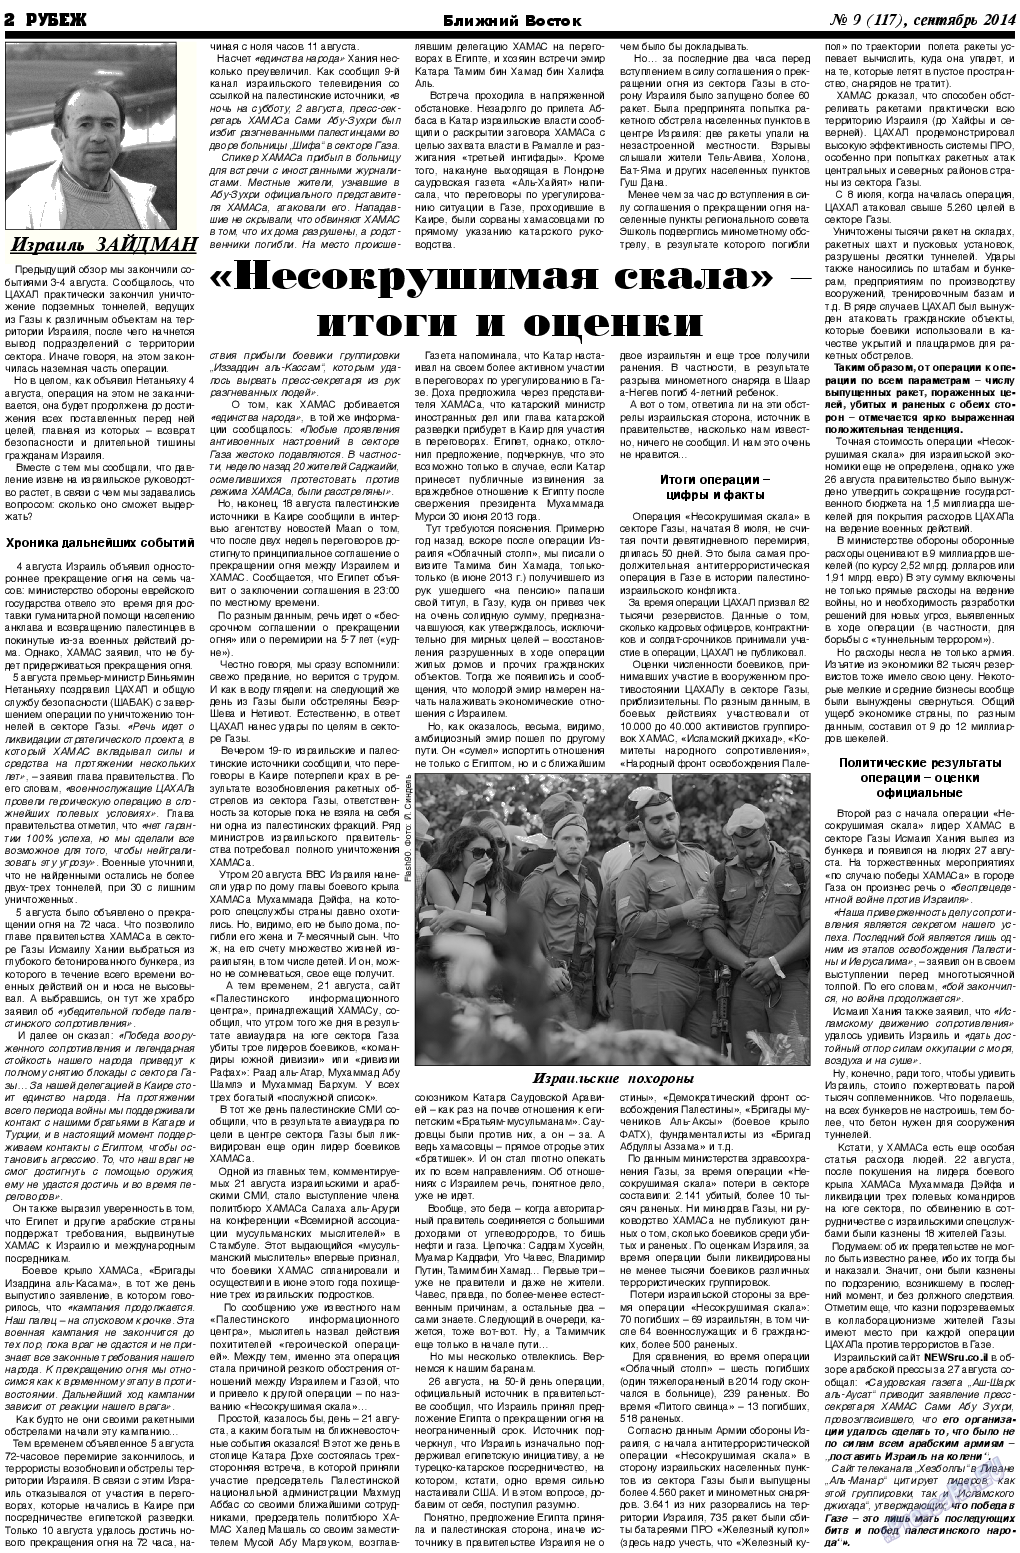 Рубеж, газета. 2014 №9 стр.2